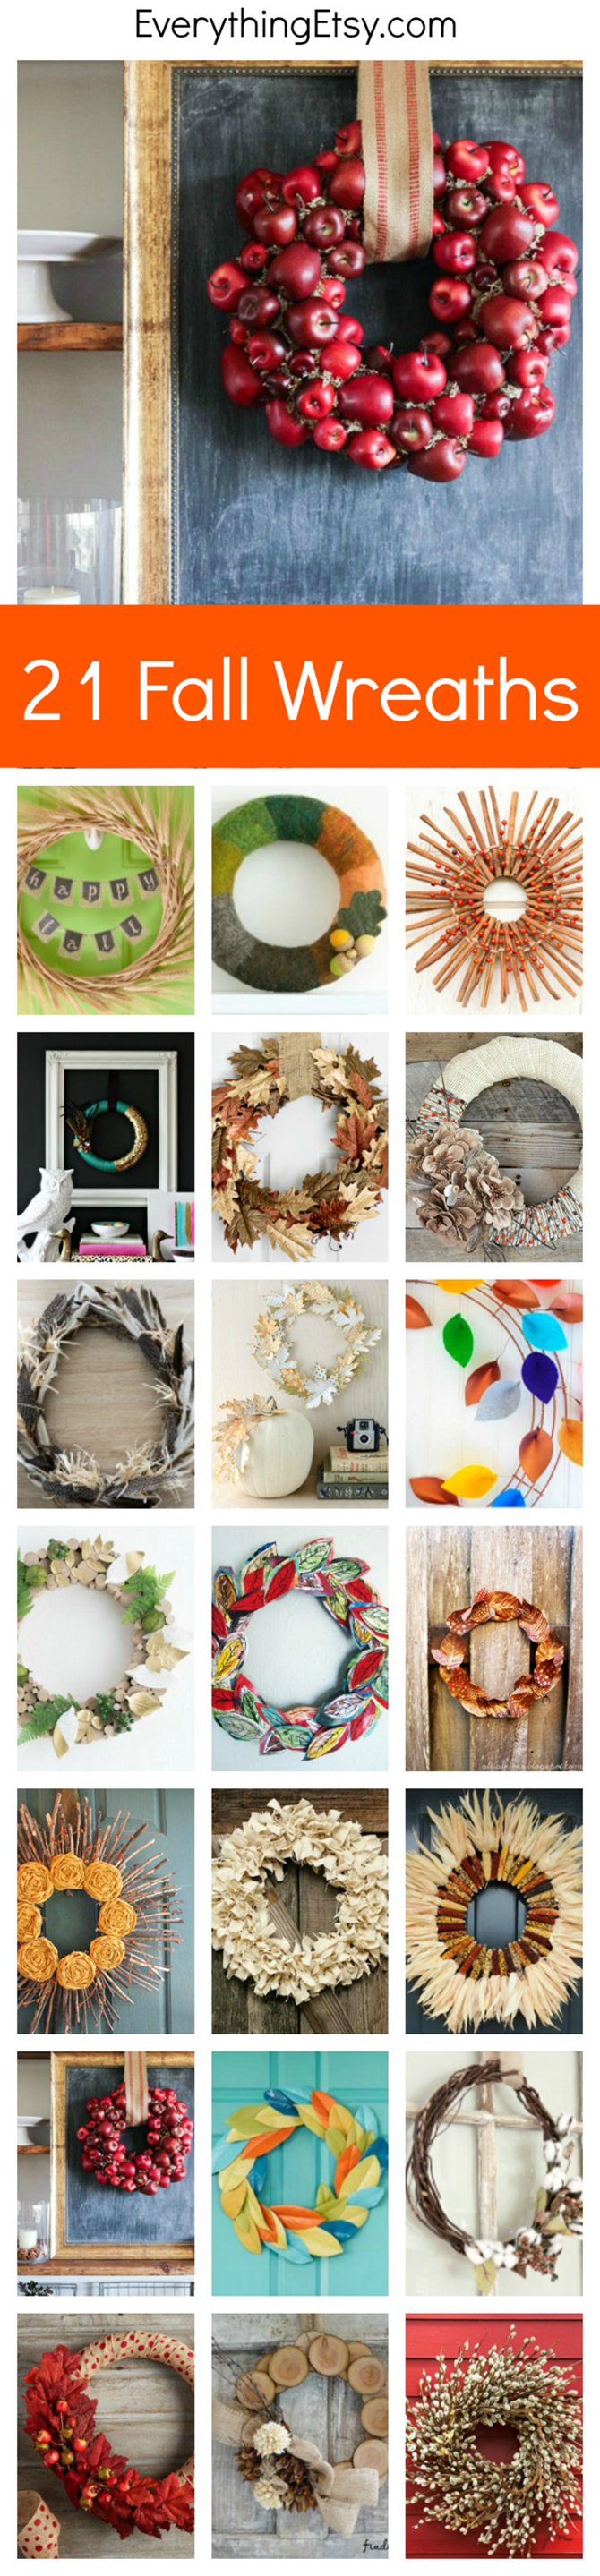 21-Fall-Wreath-Ideas-and-Tutorials-on-EverythingEtsy